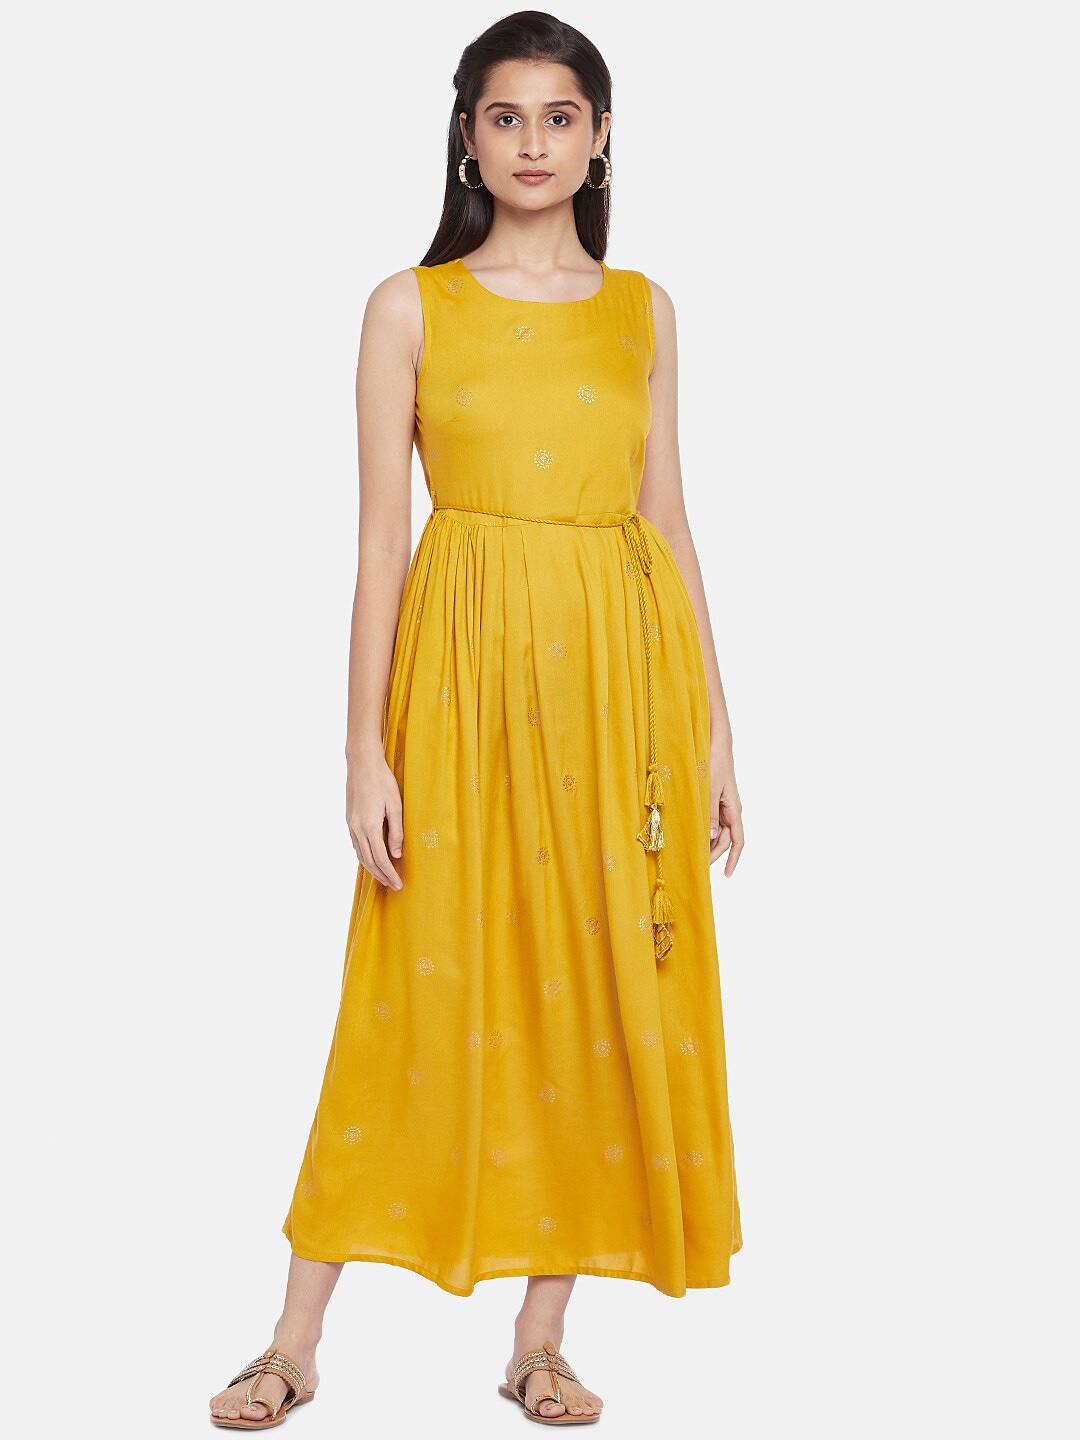 AKKRITI BY PANTALOONS Mustard Yellow Ethnic Motifs Ethnic Midi Dress Price in India